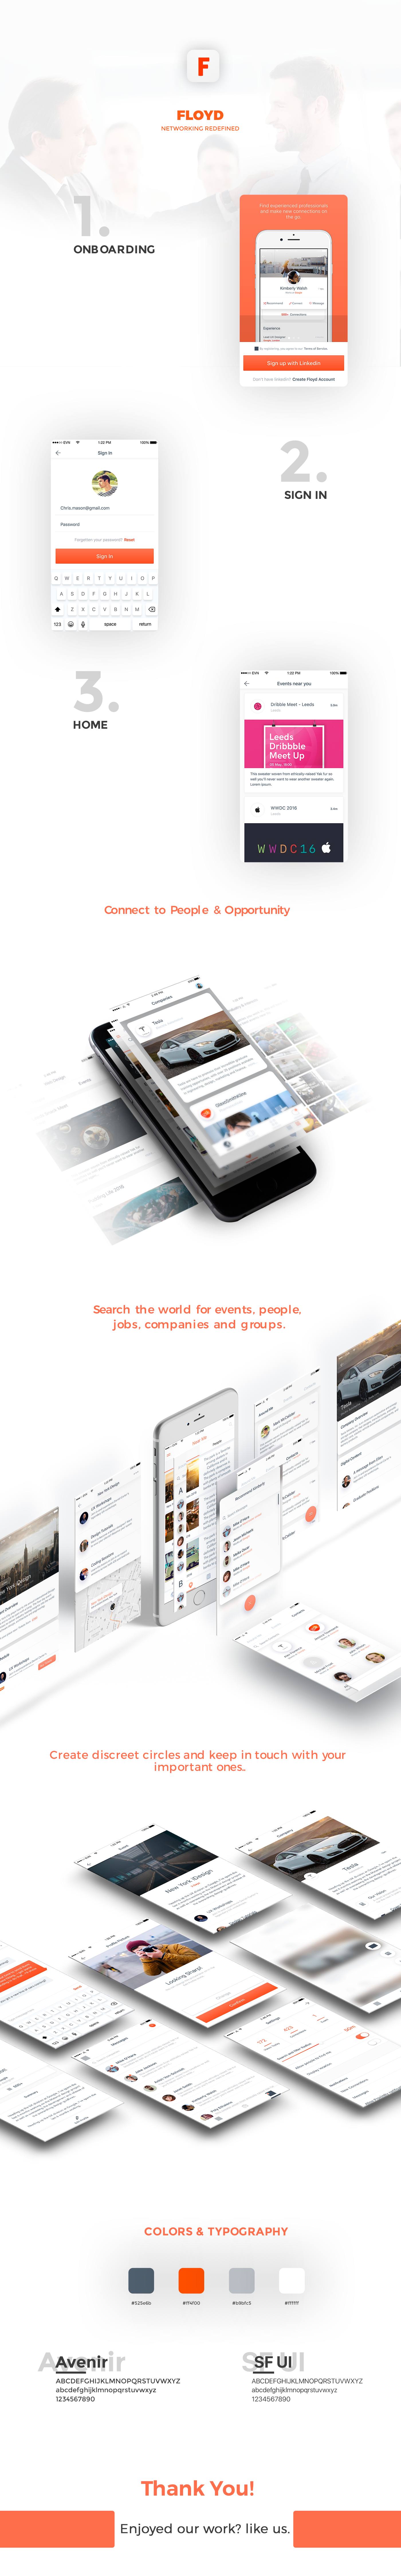 Social Networking business networking networking app event app Meet Ups iphone app